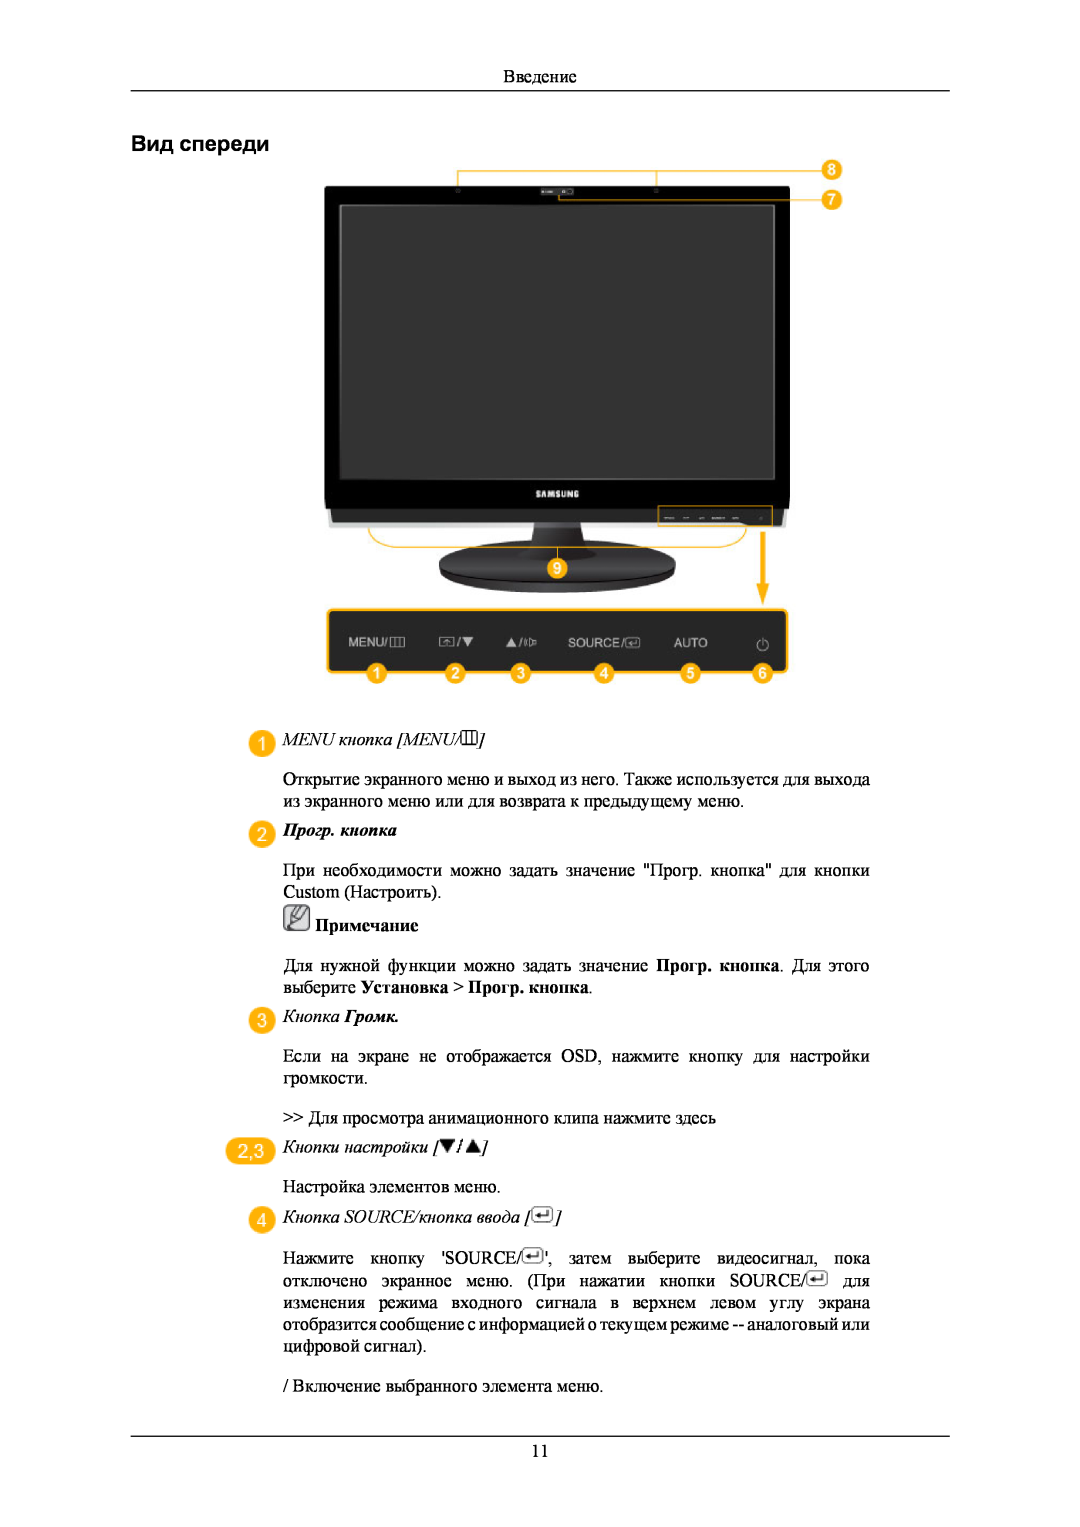 Samsung LS24LIUJFV/EN manual Вид спереди, MENU кнопка MENU, Кнопка Громк, Кнопка SOURCE/кнопка ввода, Прoгр. кнопка 